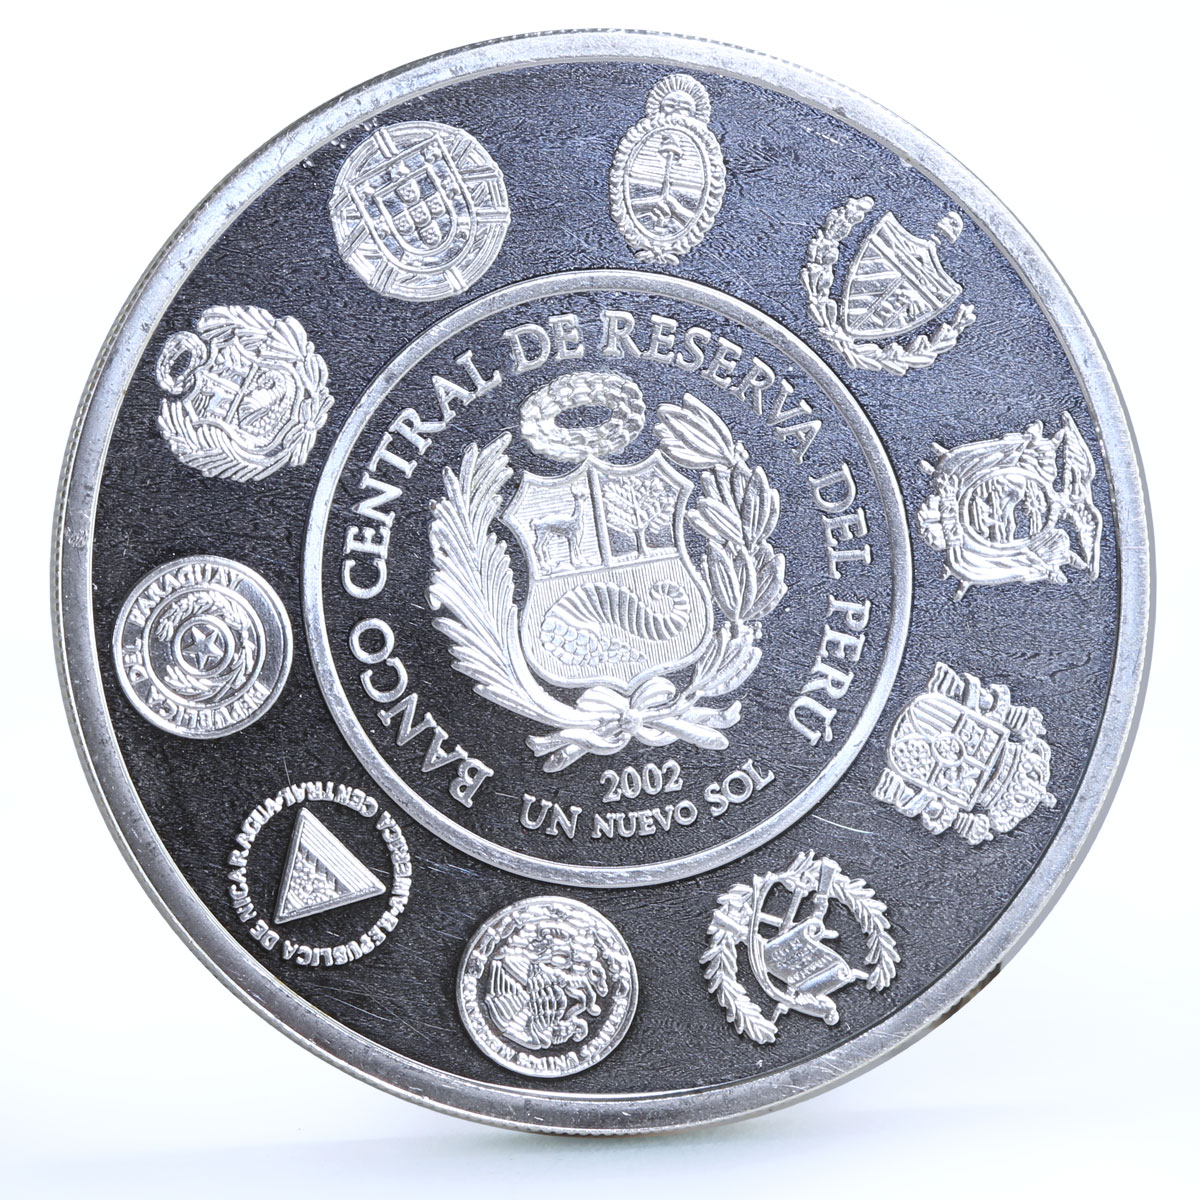 Peru 1 sol Indians Ship Boat Sailing Moche Ceramic Crafts proof silver coin 2002